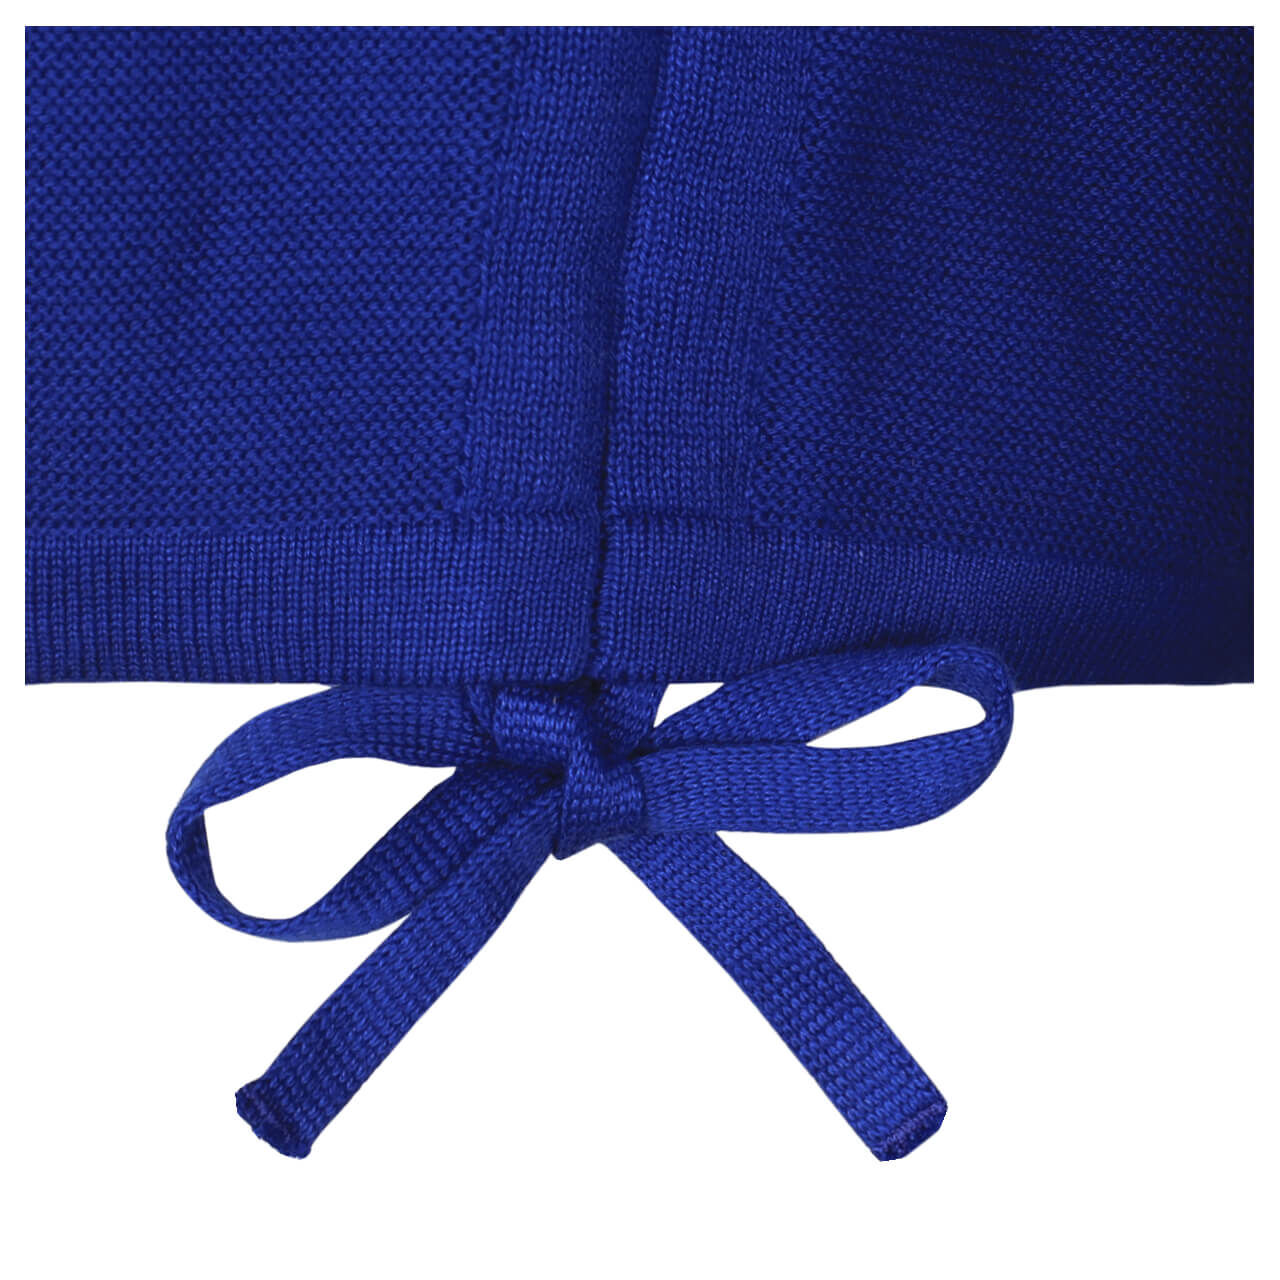 Cecil Multicolored Stripe Pullover für Damen in Kornblumenblau gestreift, FarbNr.: 33444